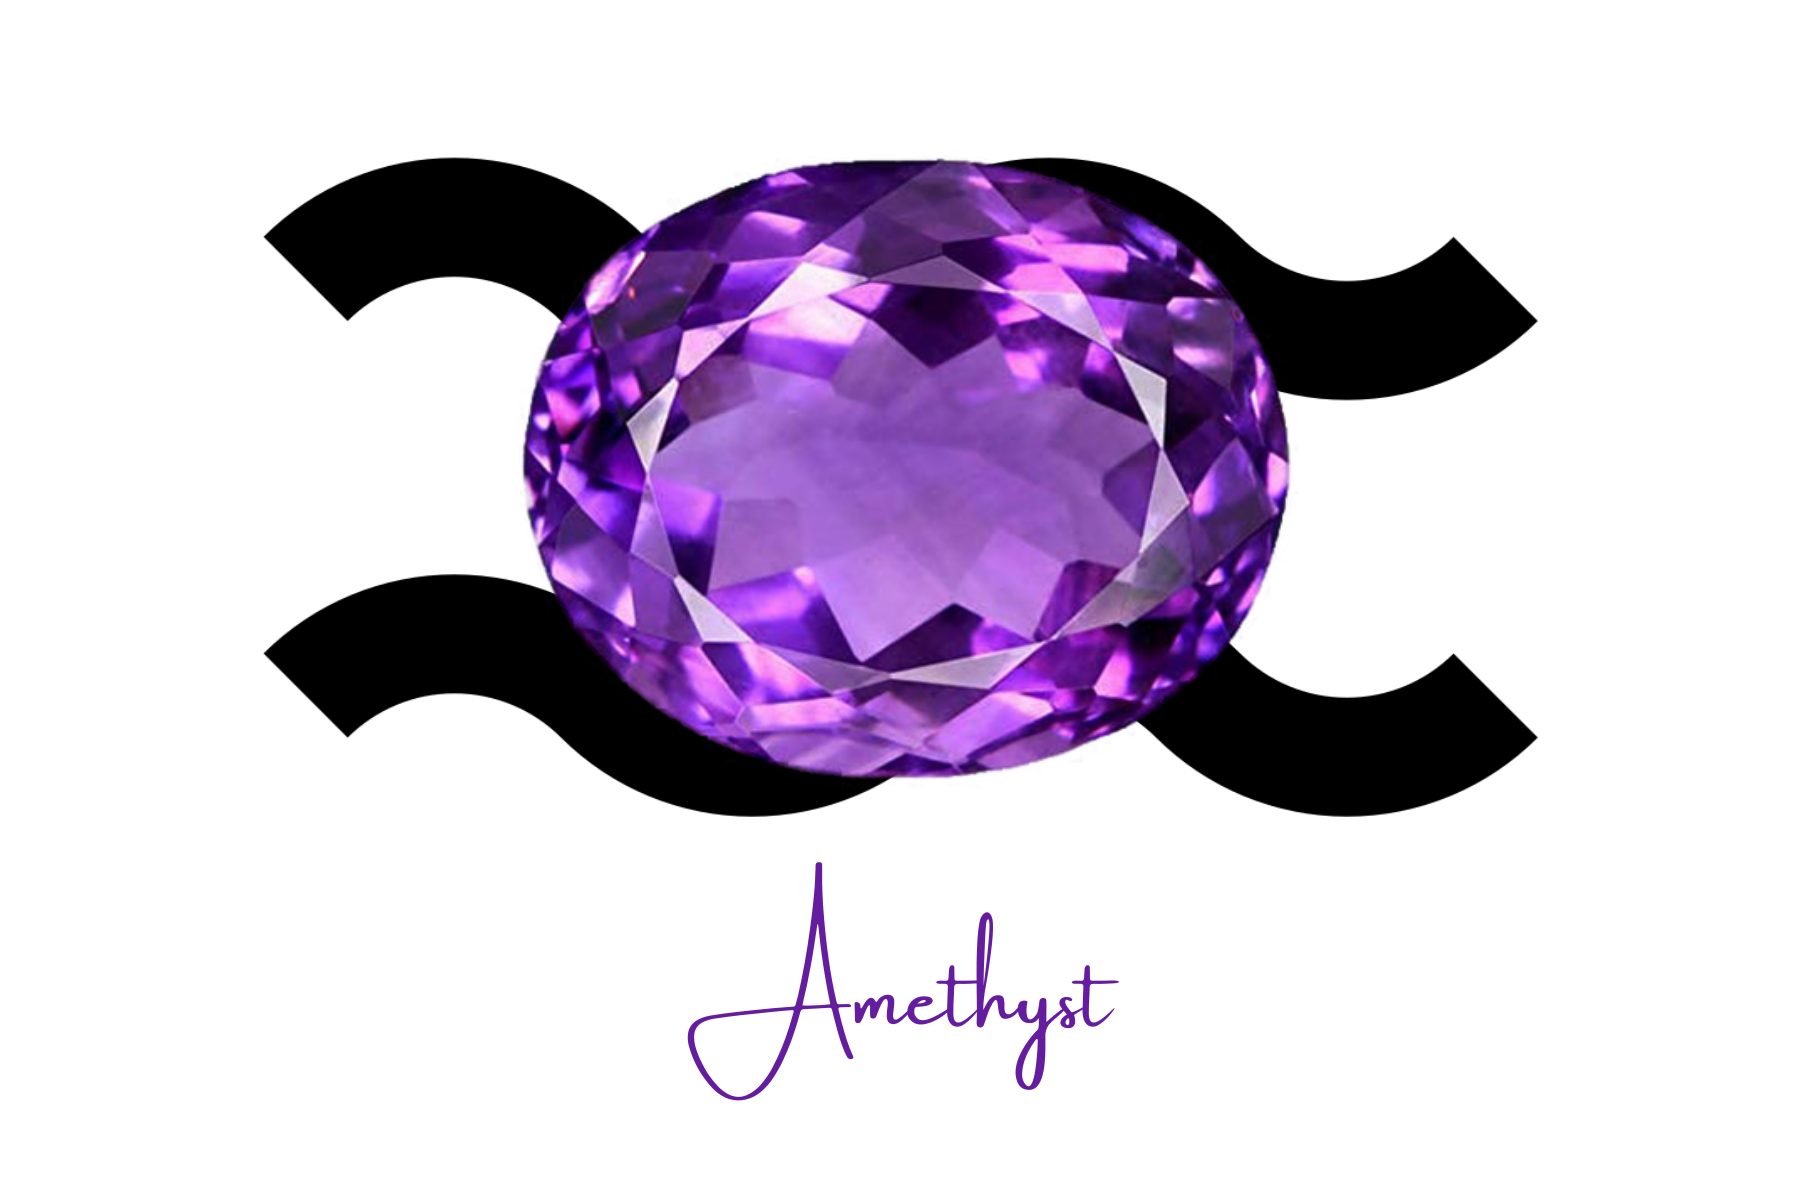 Oblong purple amethyst over the Aquarius sign